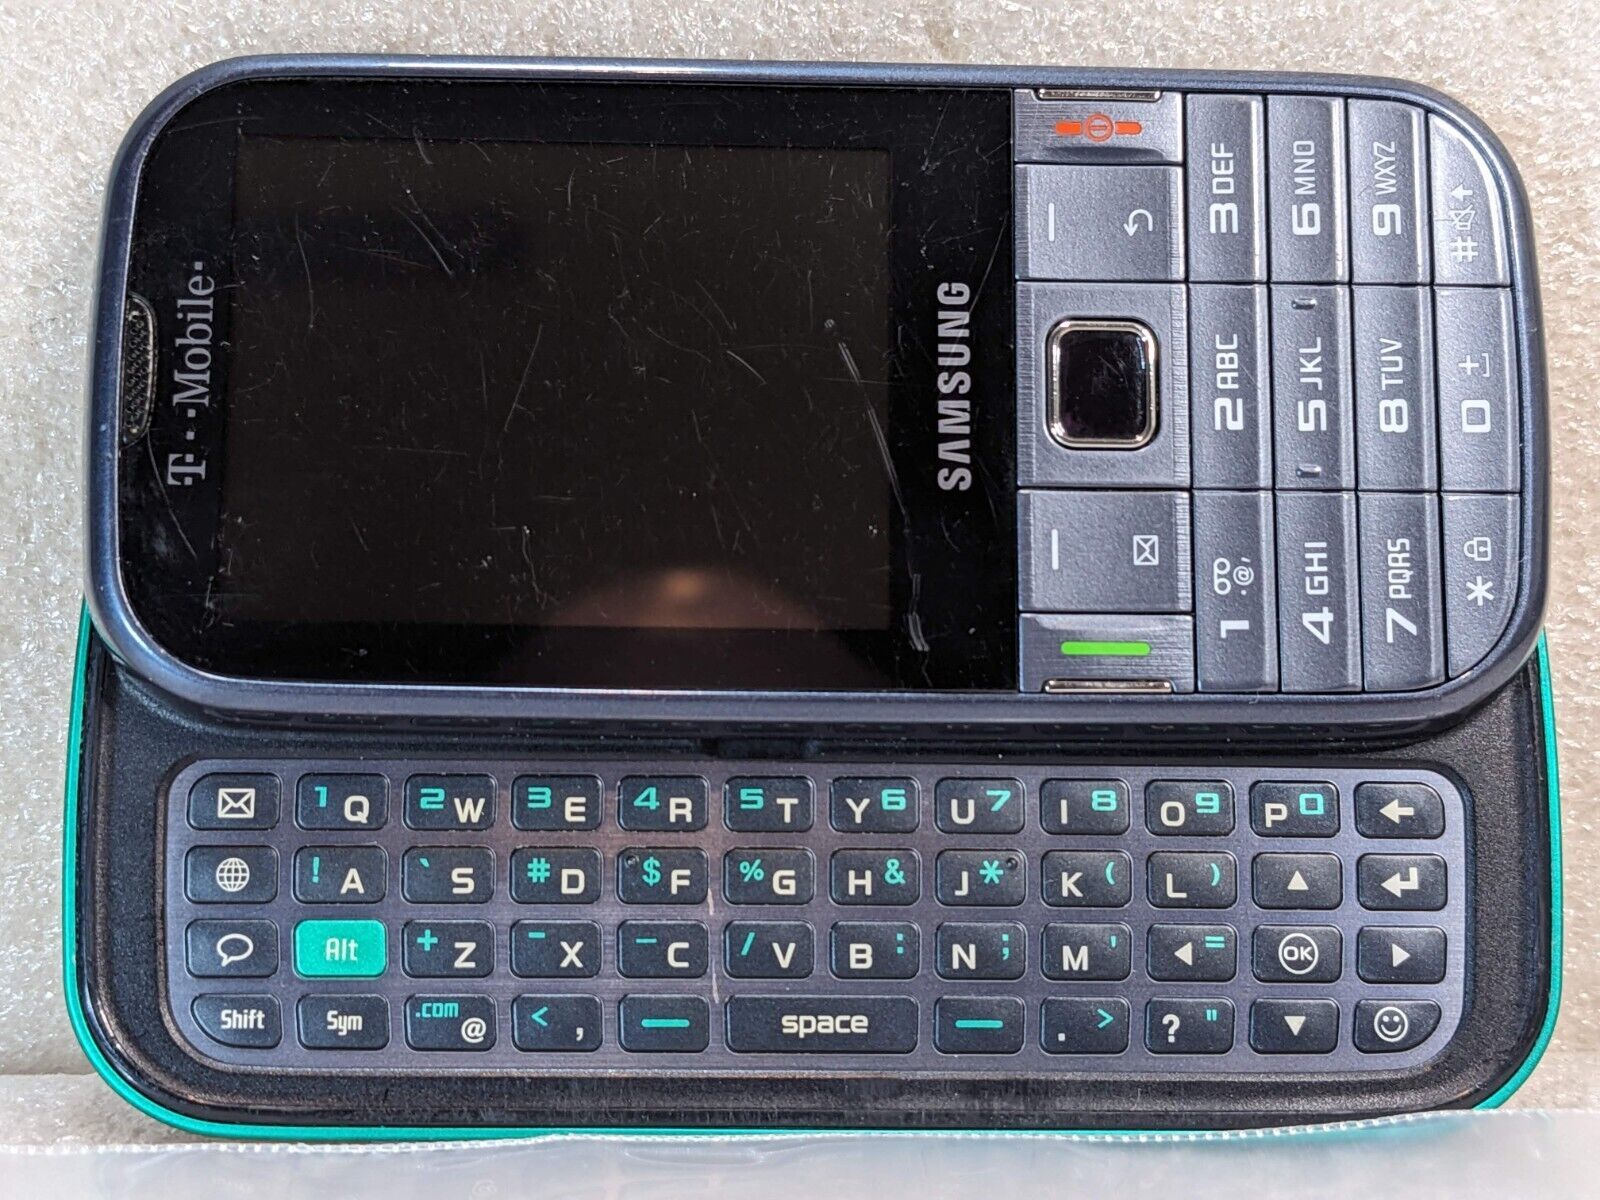 Samsung SCH-A670 Verizon Cellular Flip Phone(Silver) - *Untested*